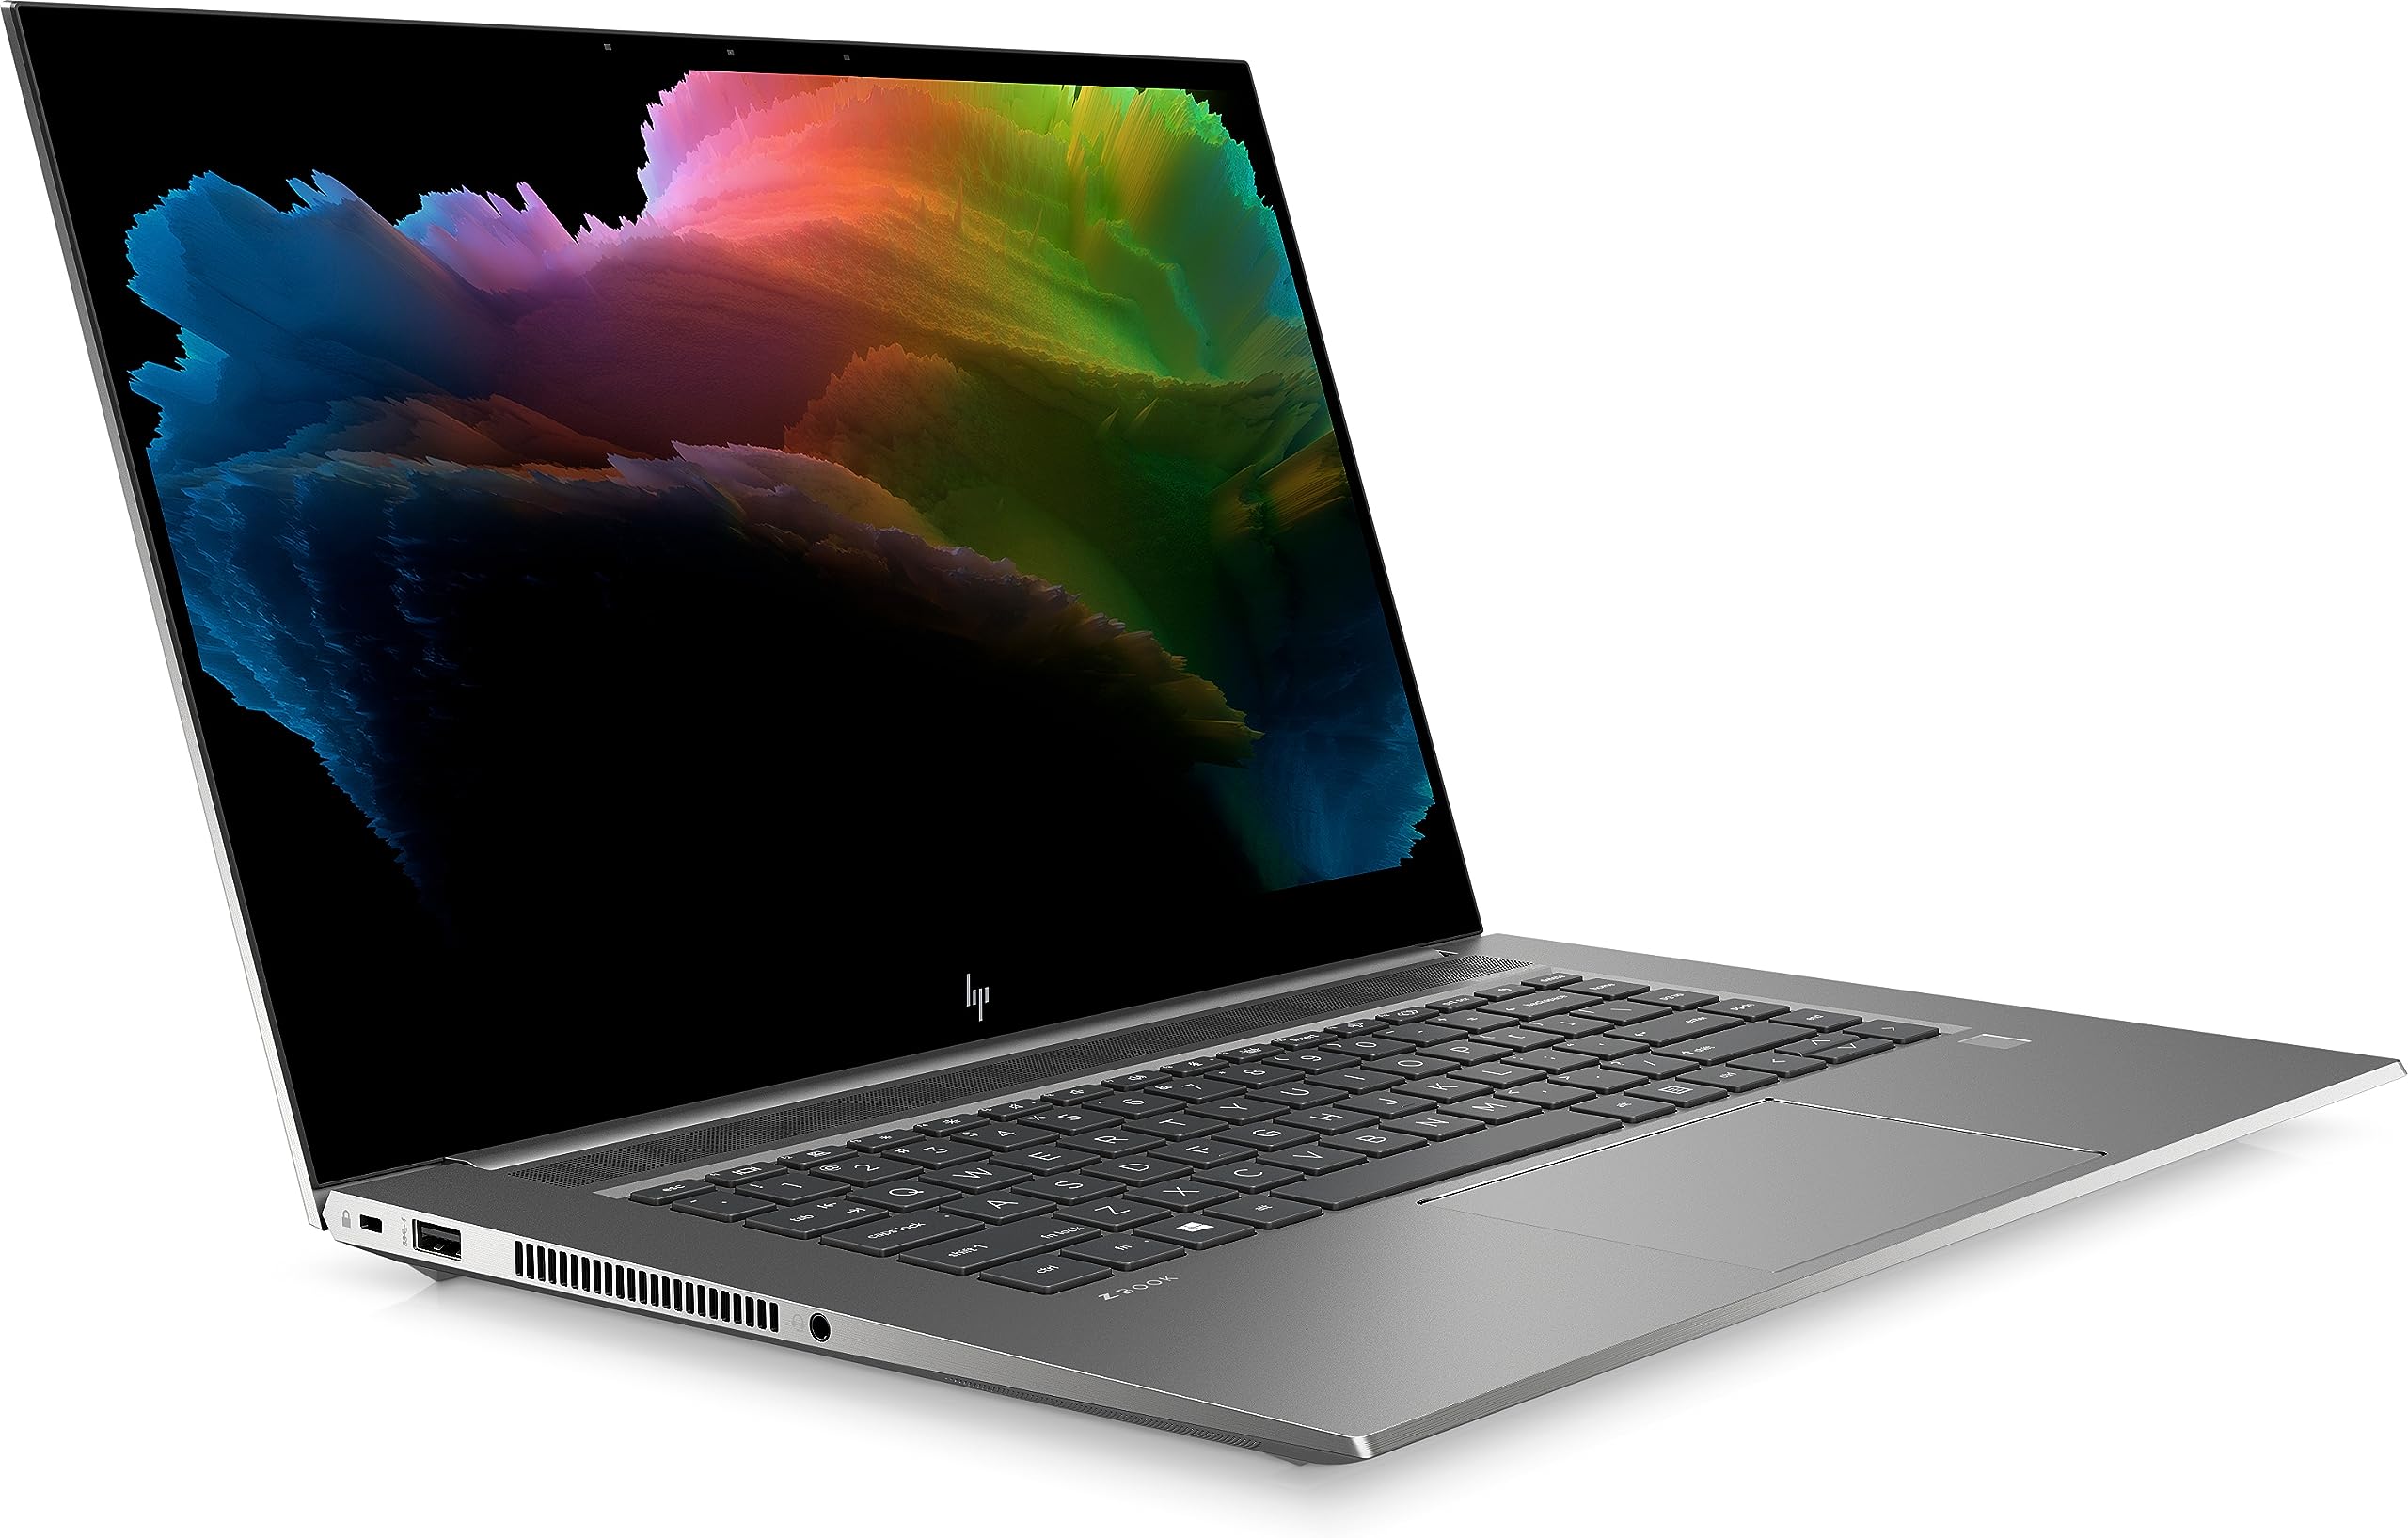 HP ZBook Create G7, Touchscreen 4K UHD, i7-10750H, Nvidia GeForce RTX